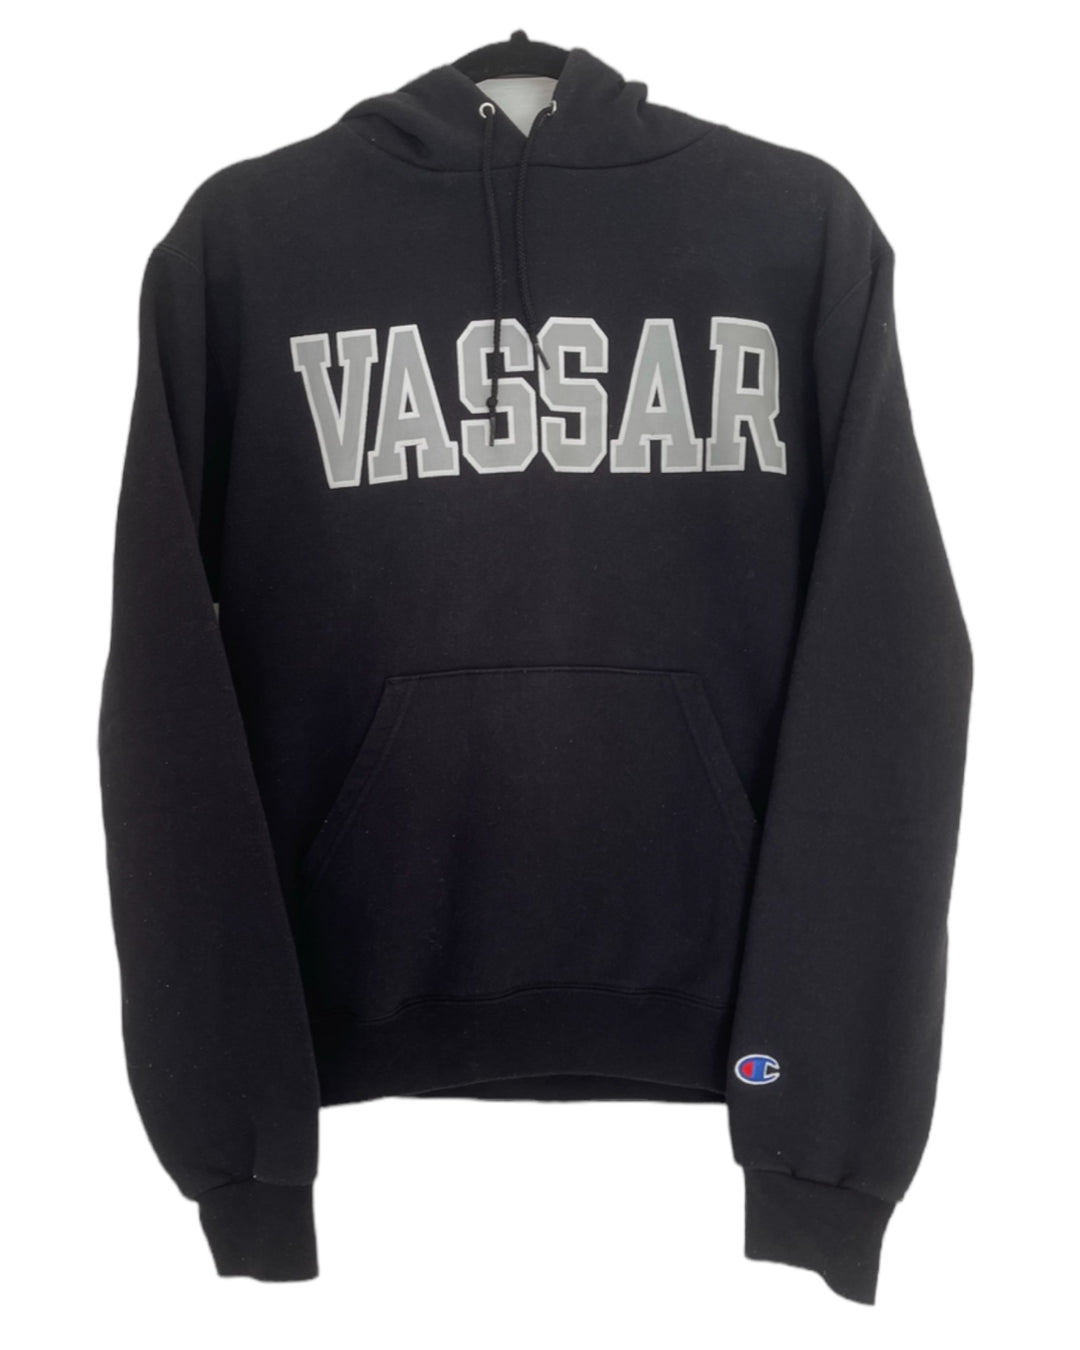 Vassar Vintage Sweatshirt